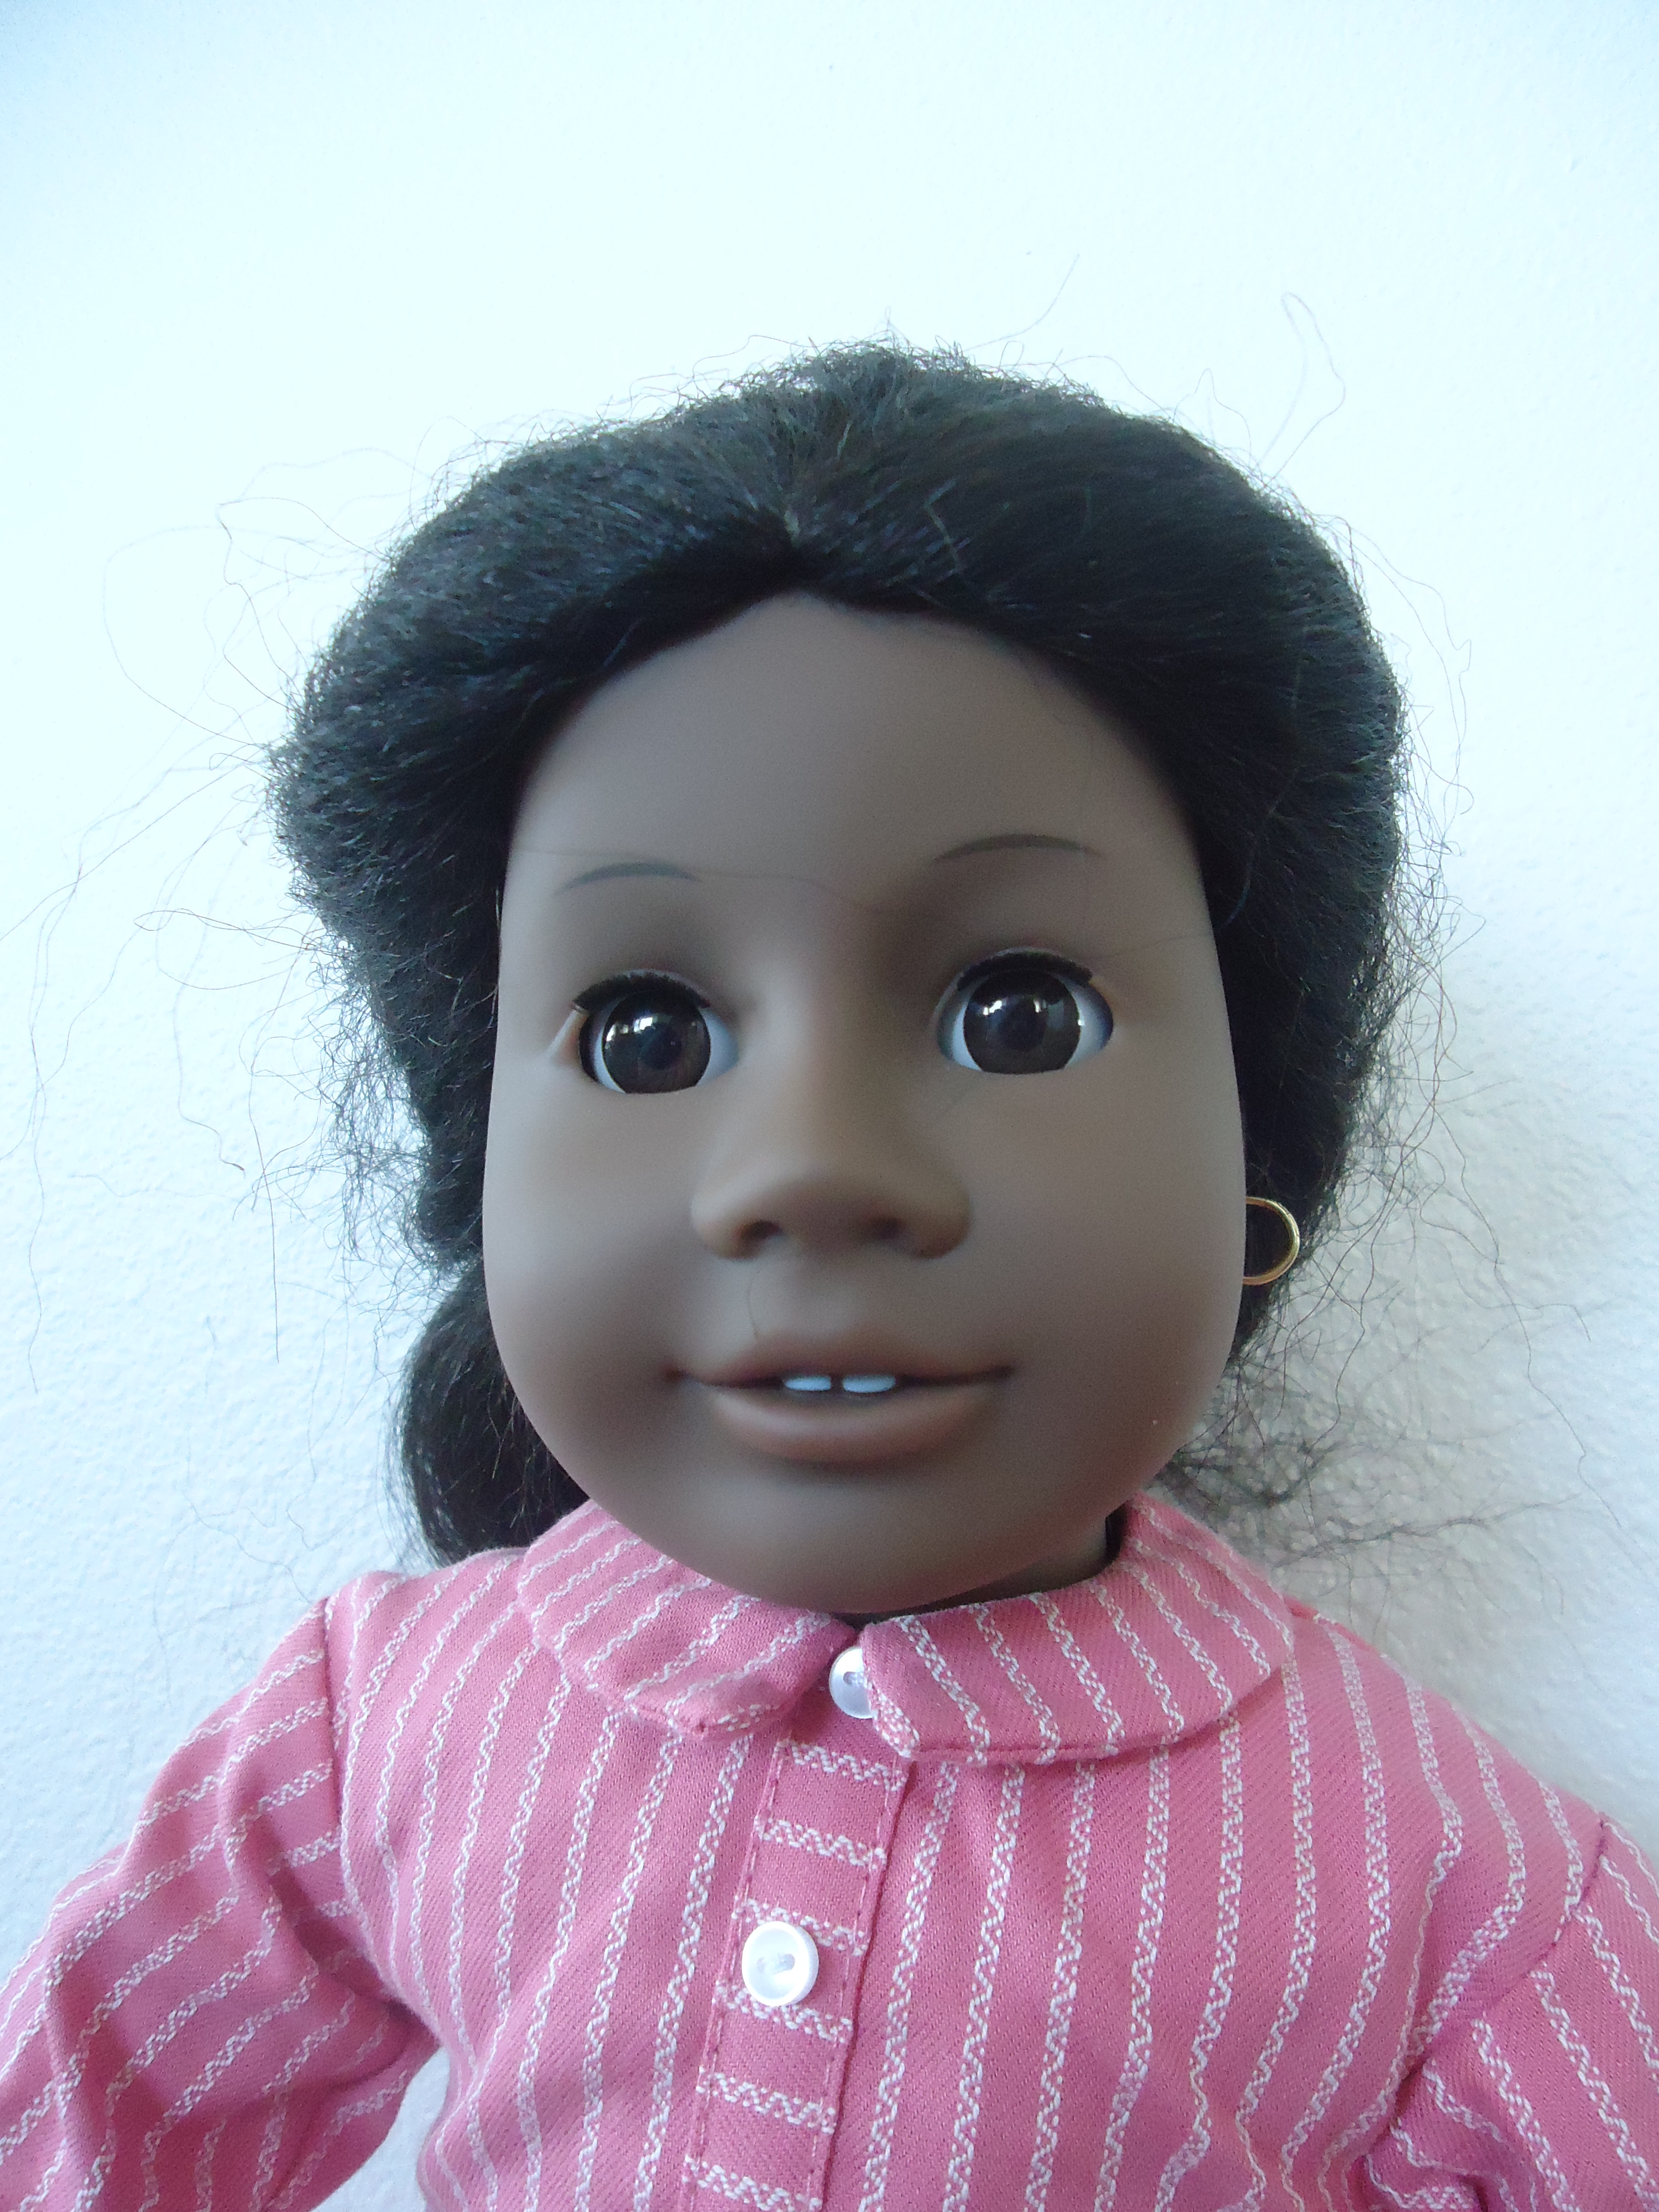 ugly american girl doll